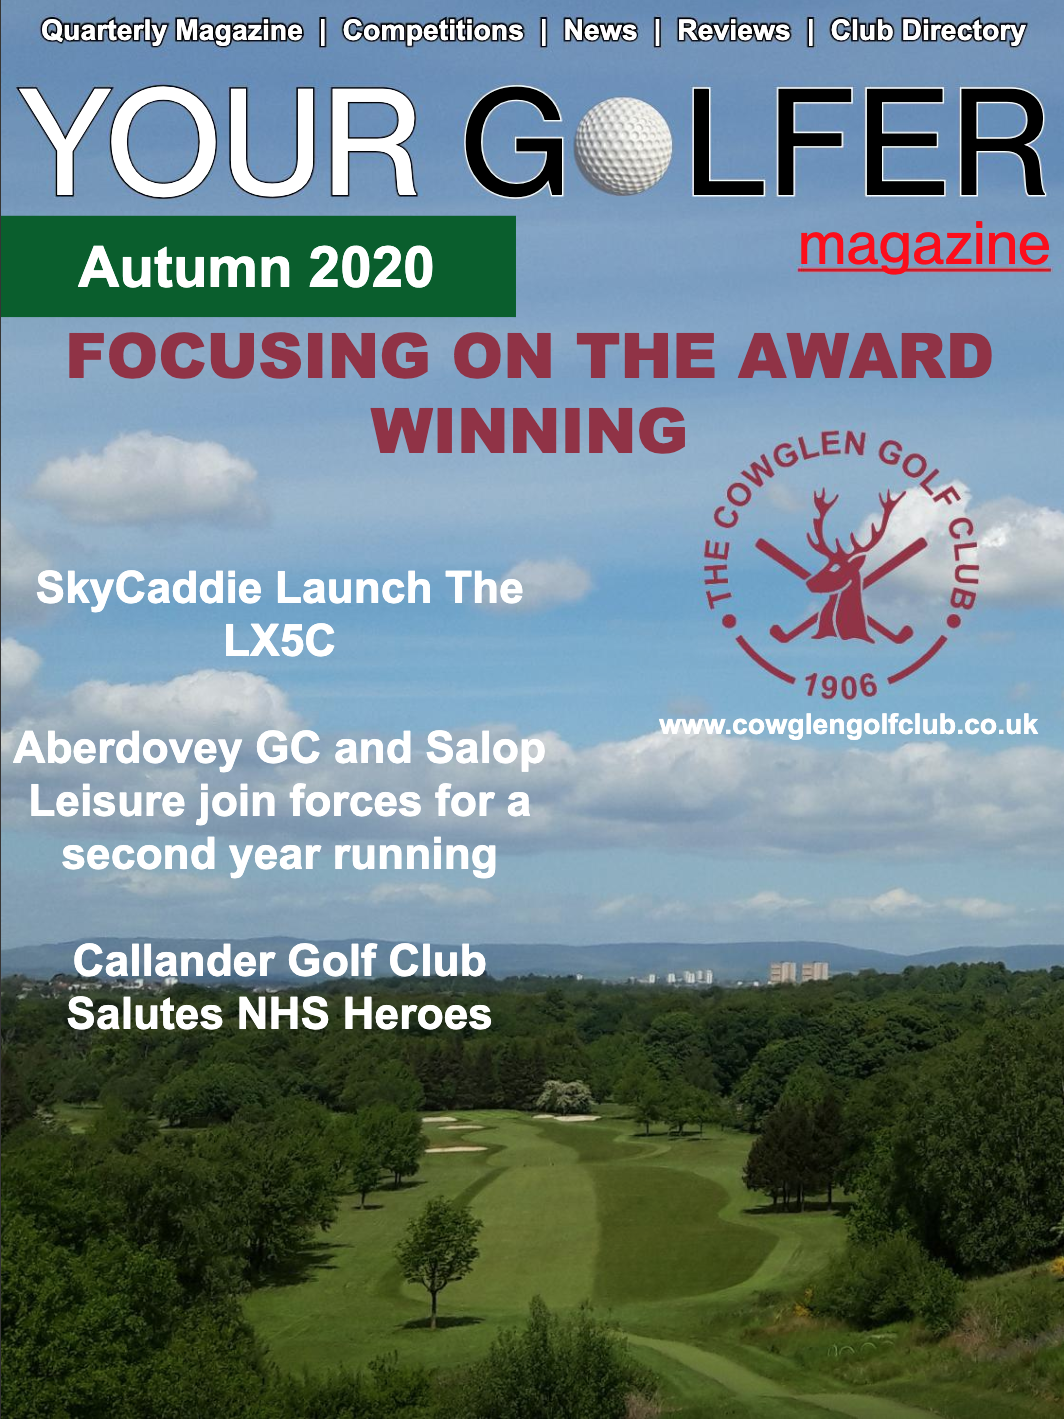 Autumn 2020 Edition of Your Golfer Magazine